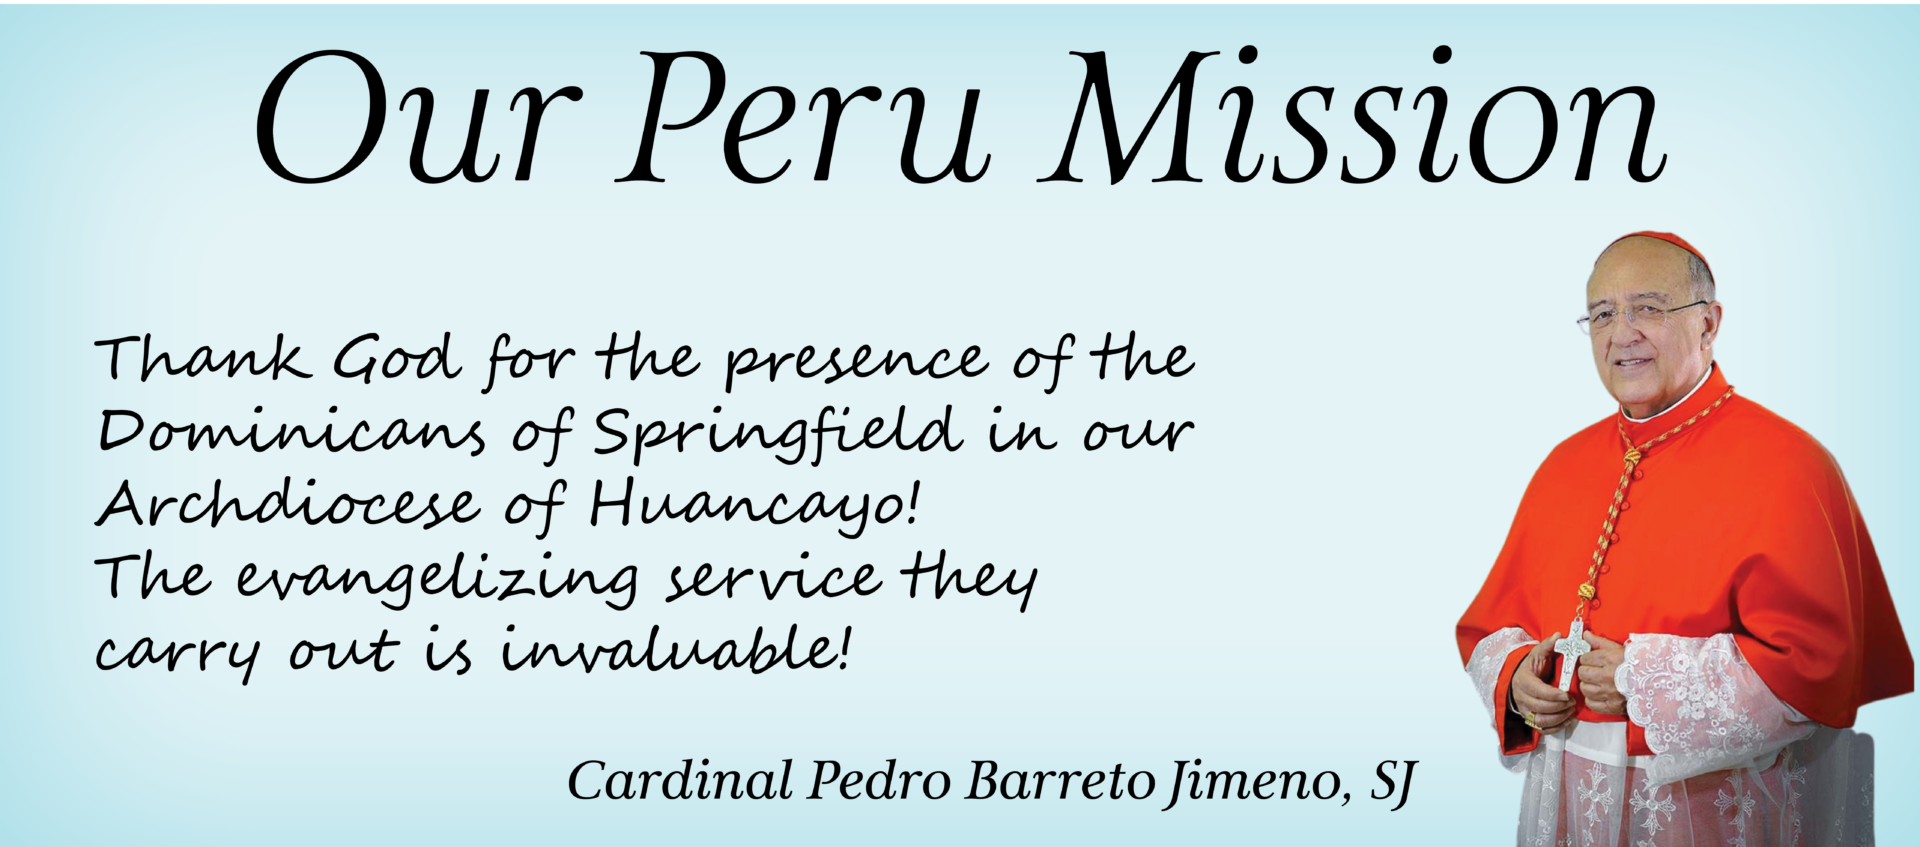 Our Peru Mission